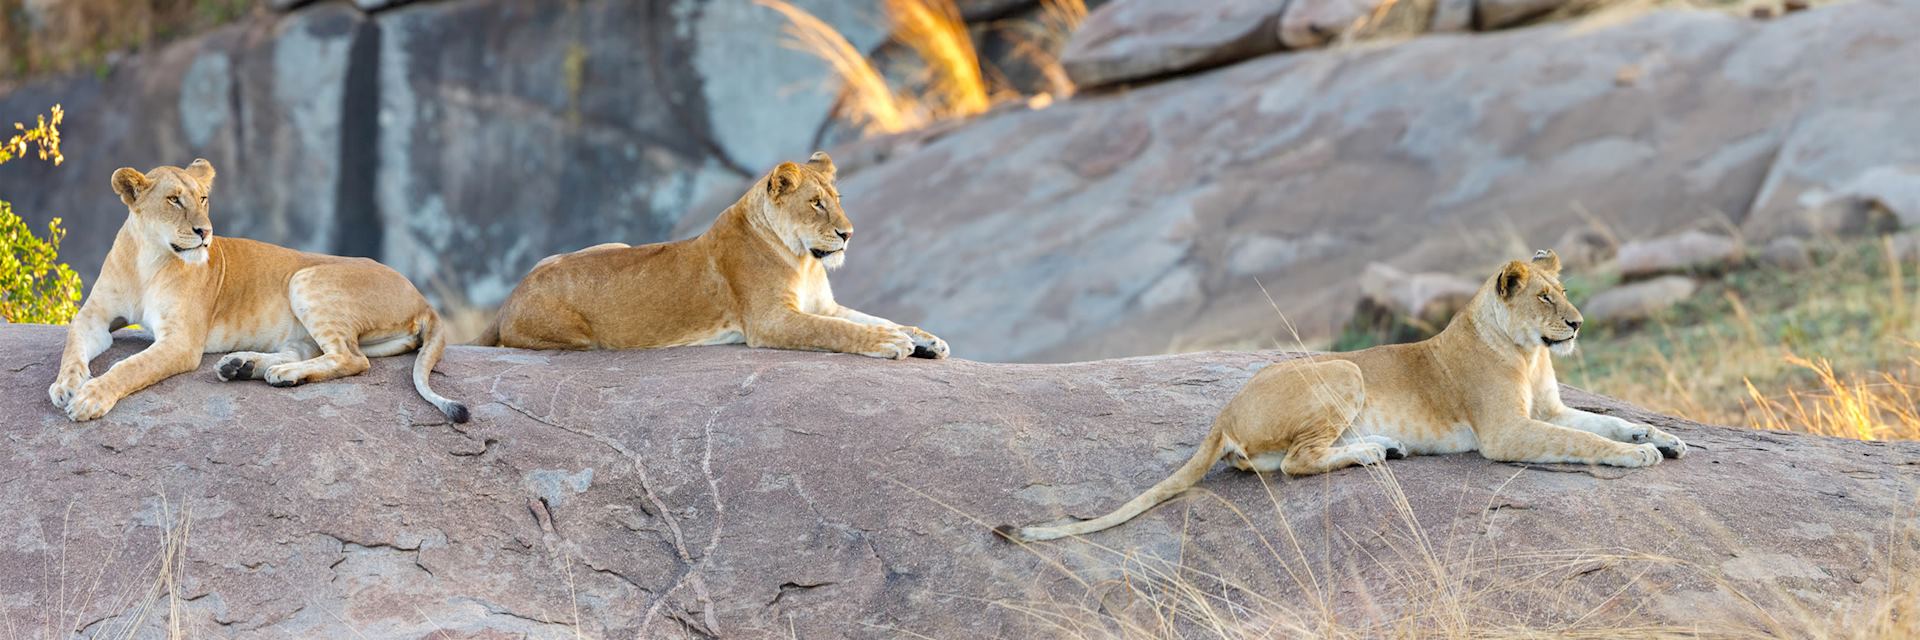 Lion in the Serengeti, Tanzania